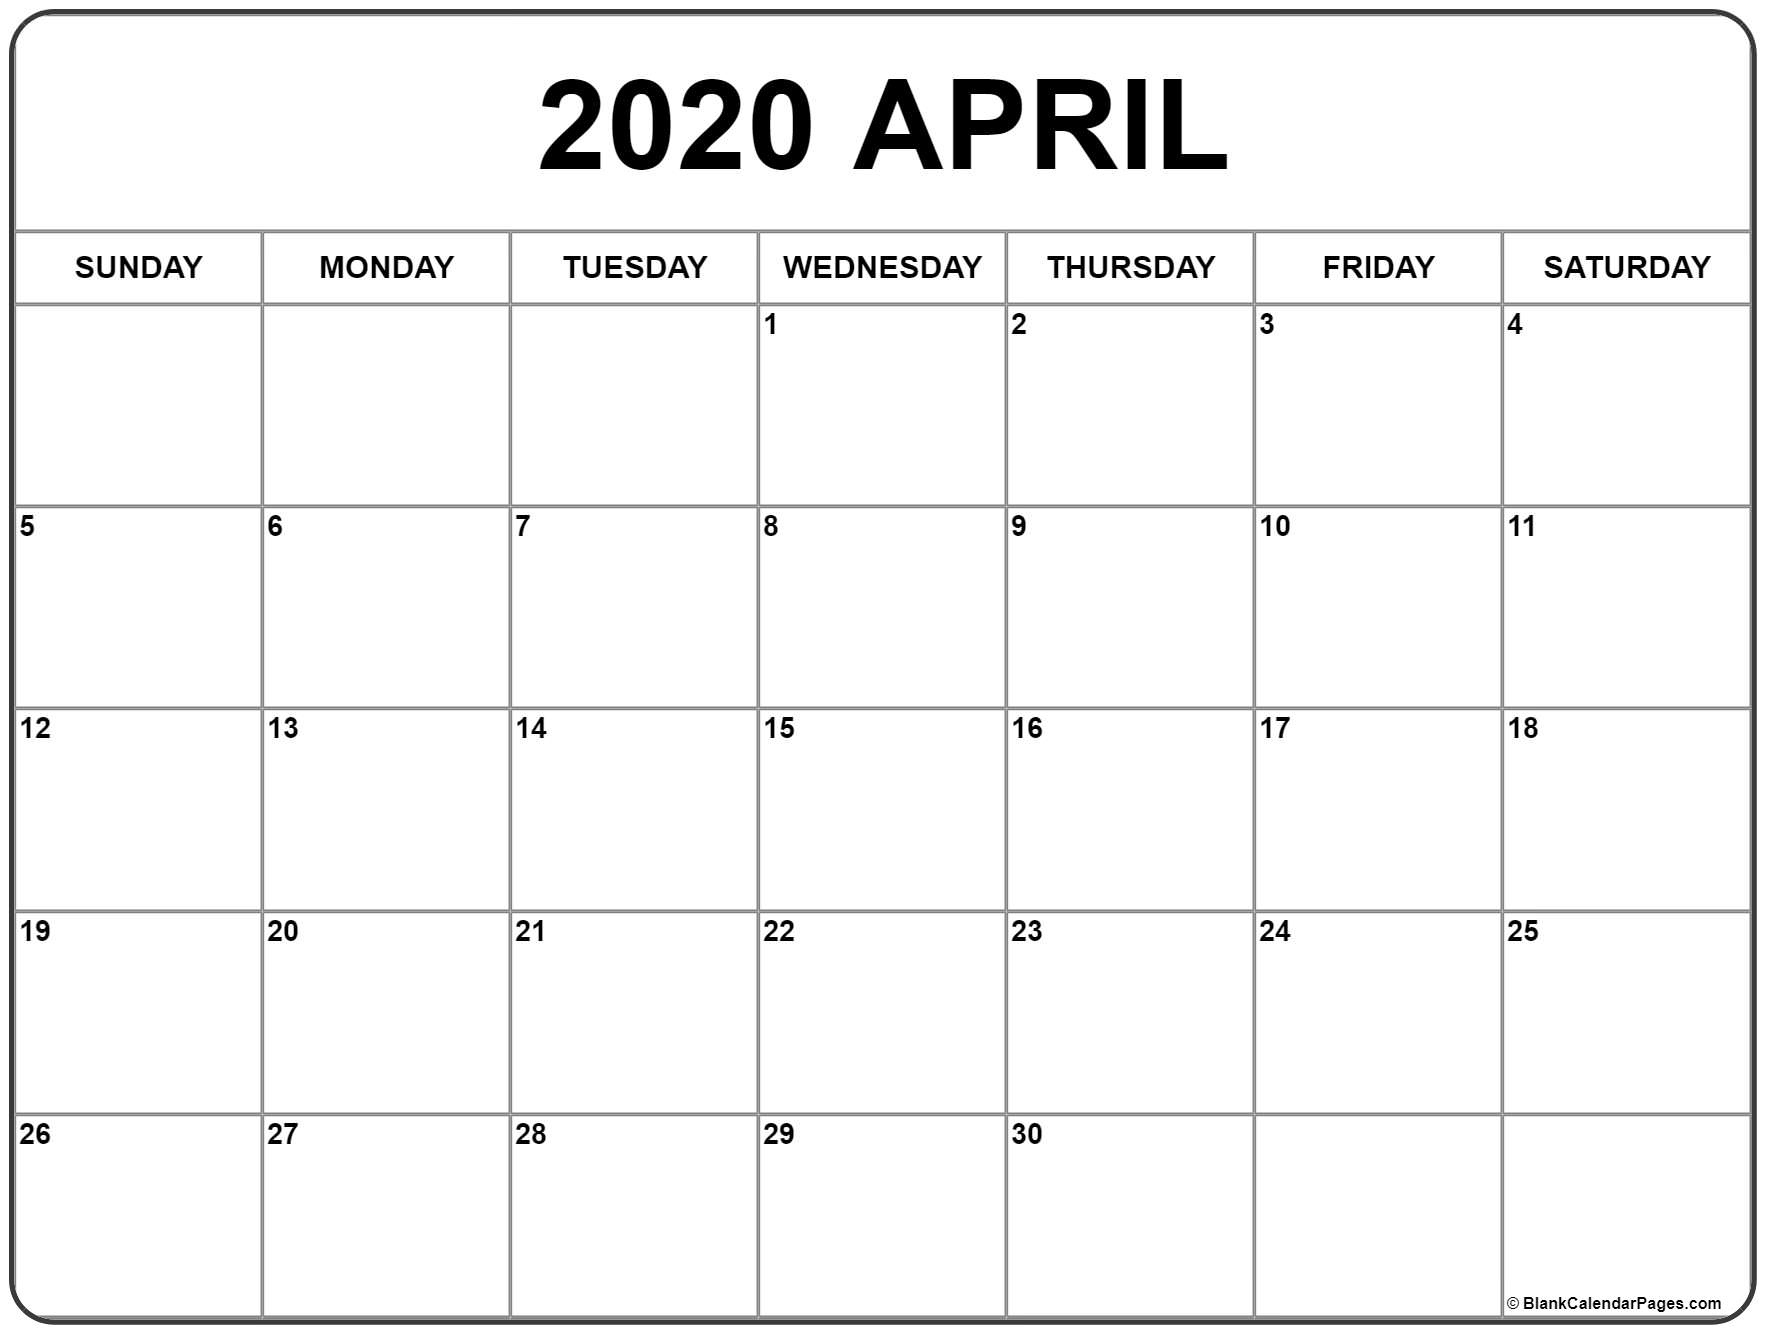 April 2020 Calendar | Free Printable Monthly Calendars April 2020 Calendar Easter